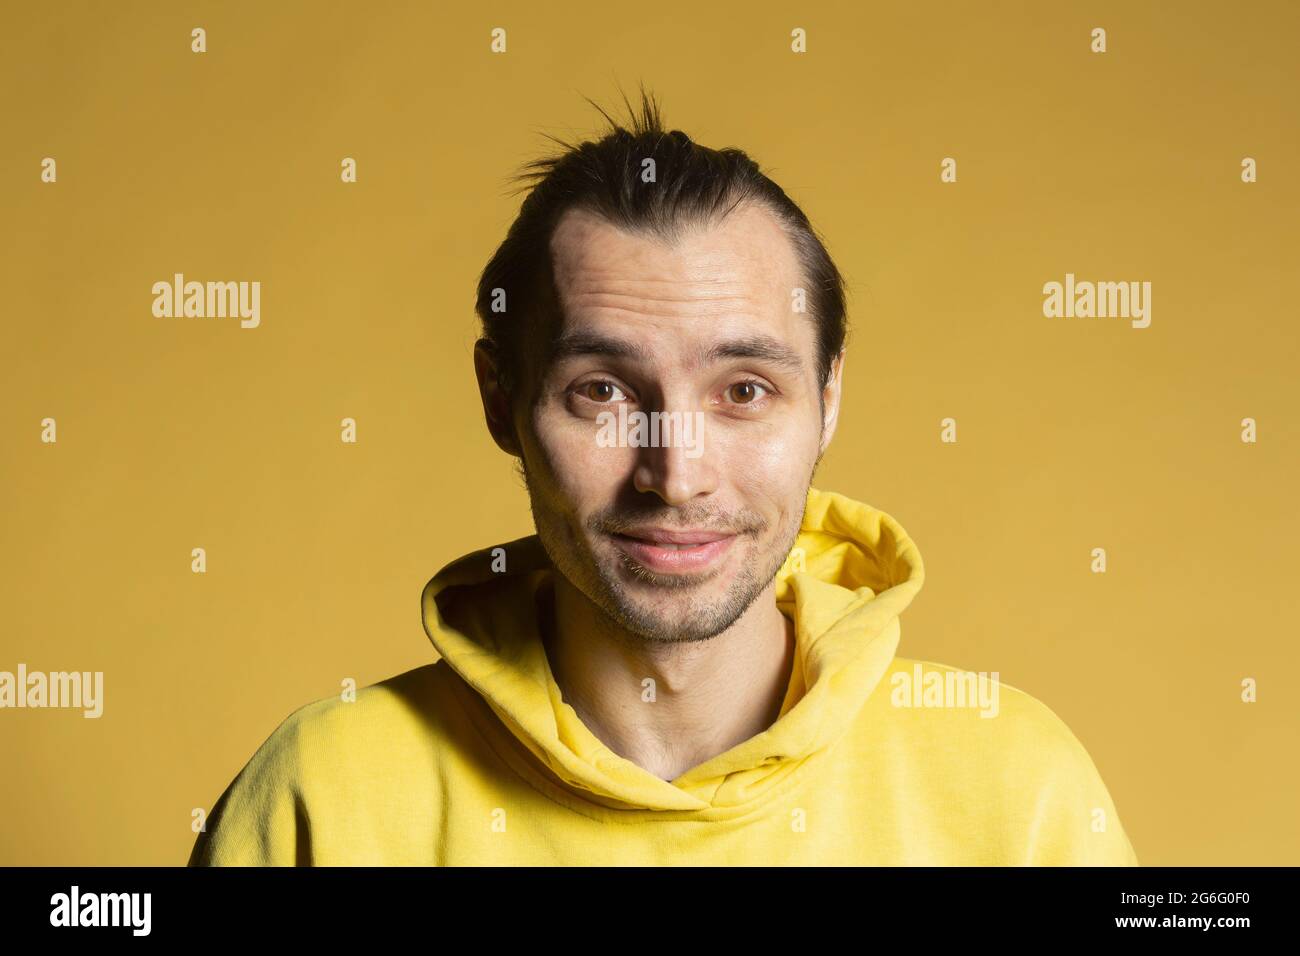 Portrait smiling man in hooded sweatshirt on yellow background Stock Photo